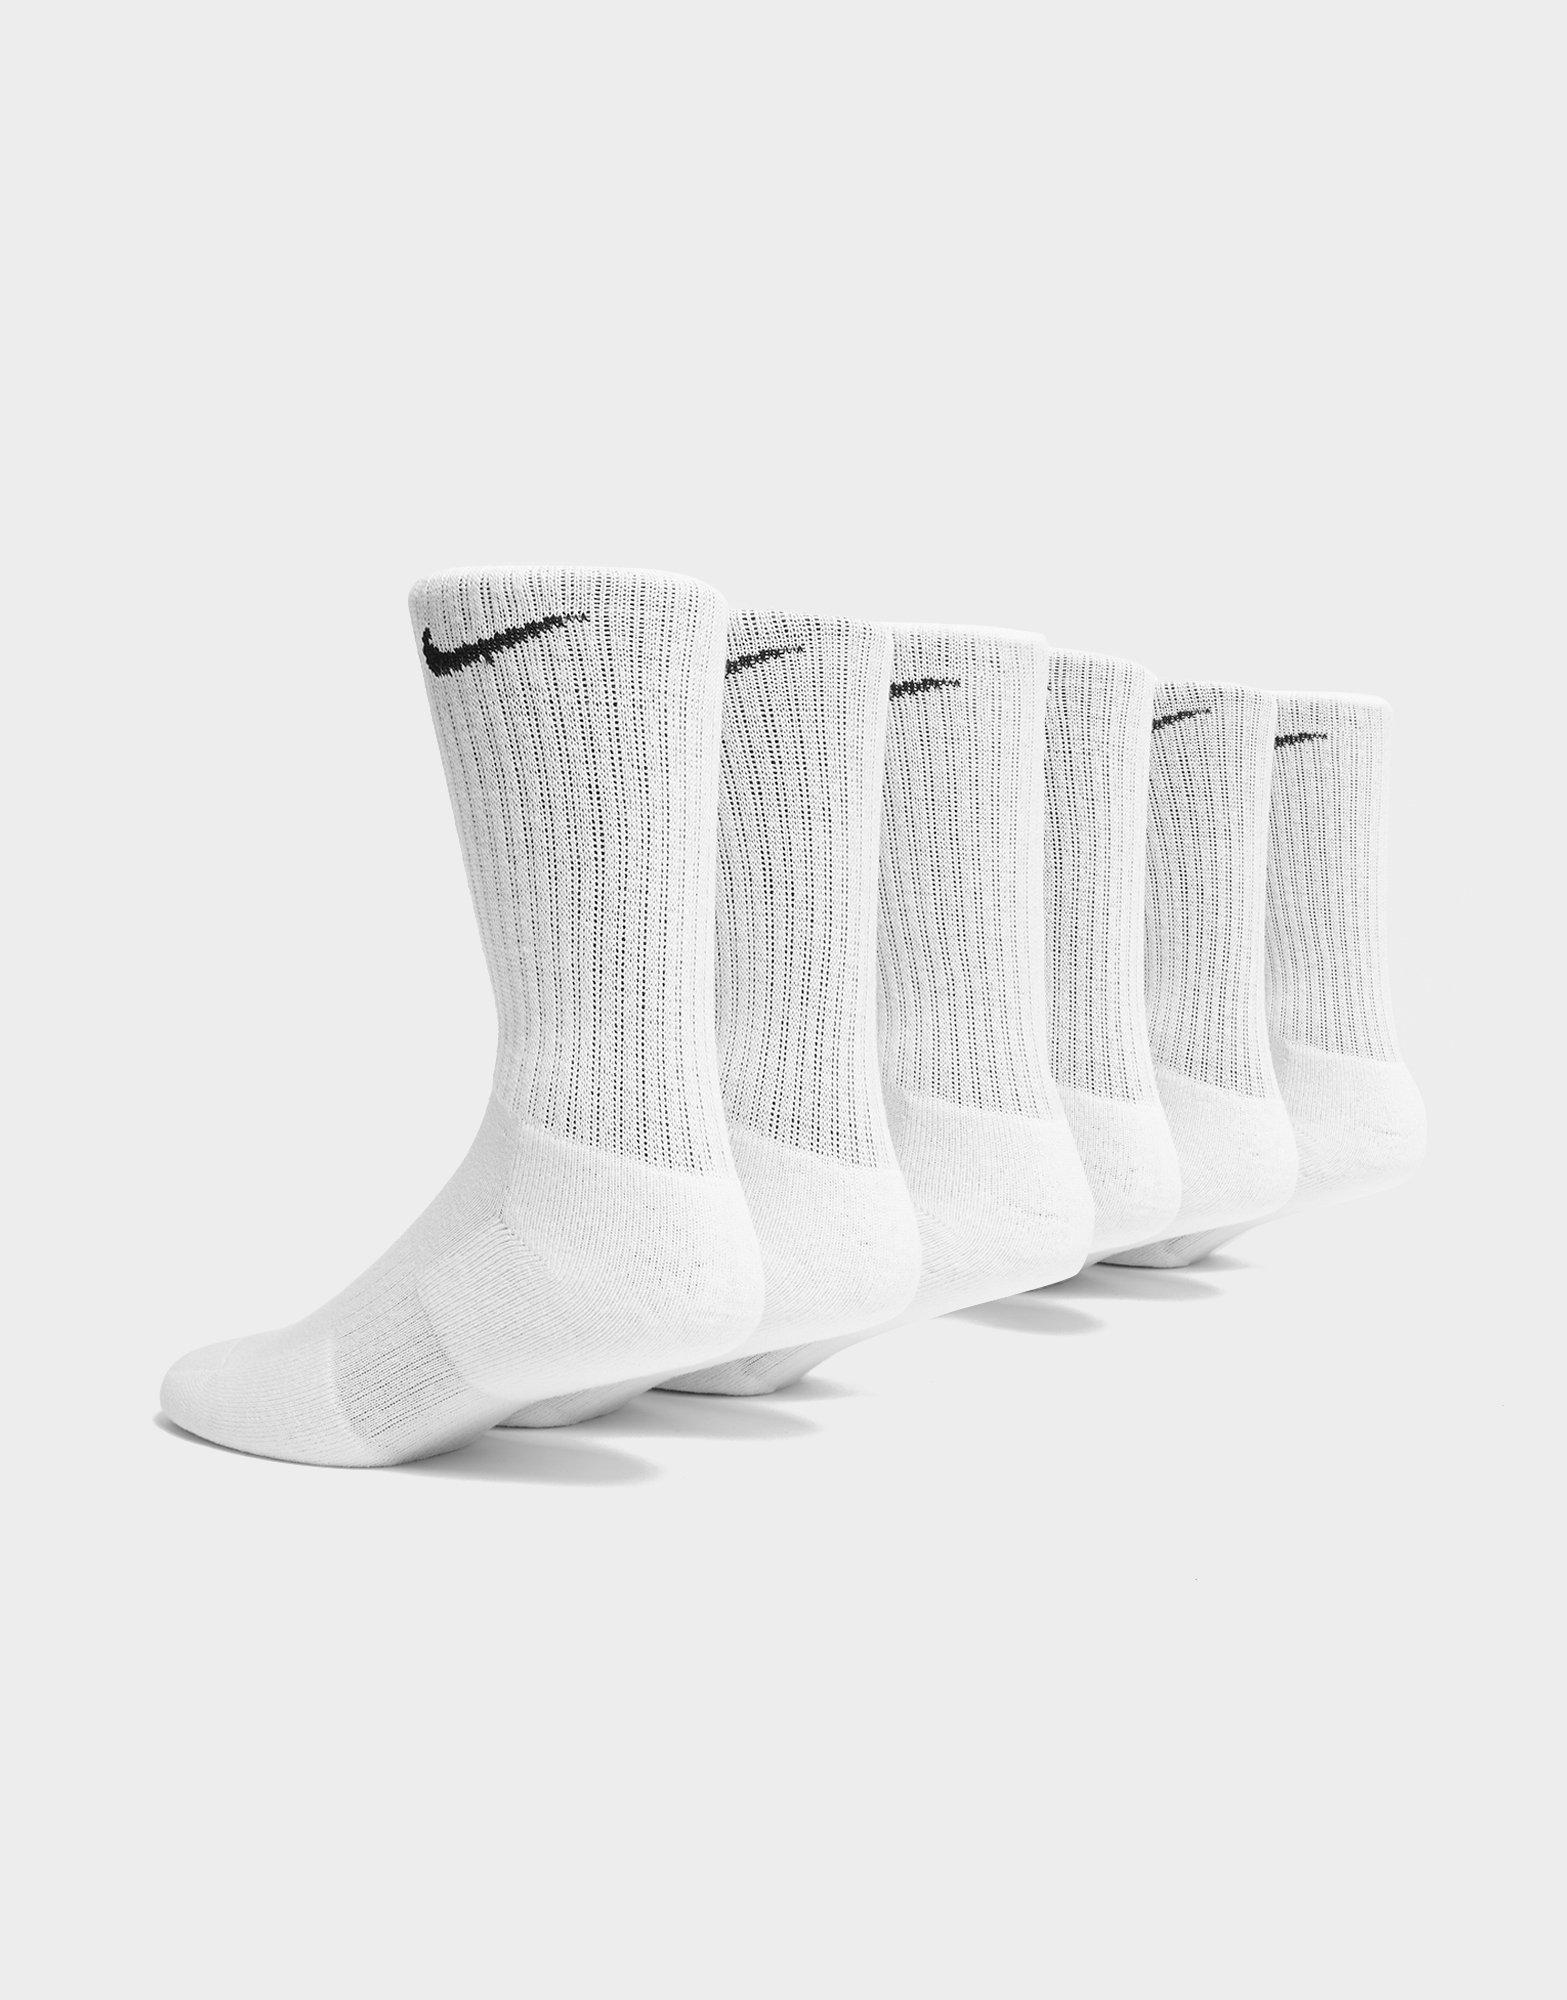 nike white crew socks 6 pack